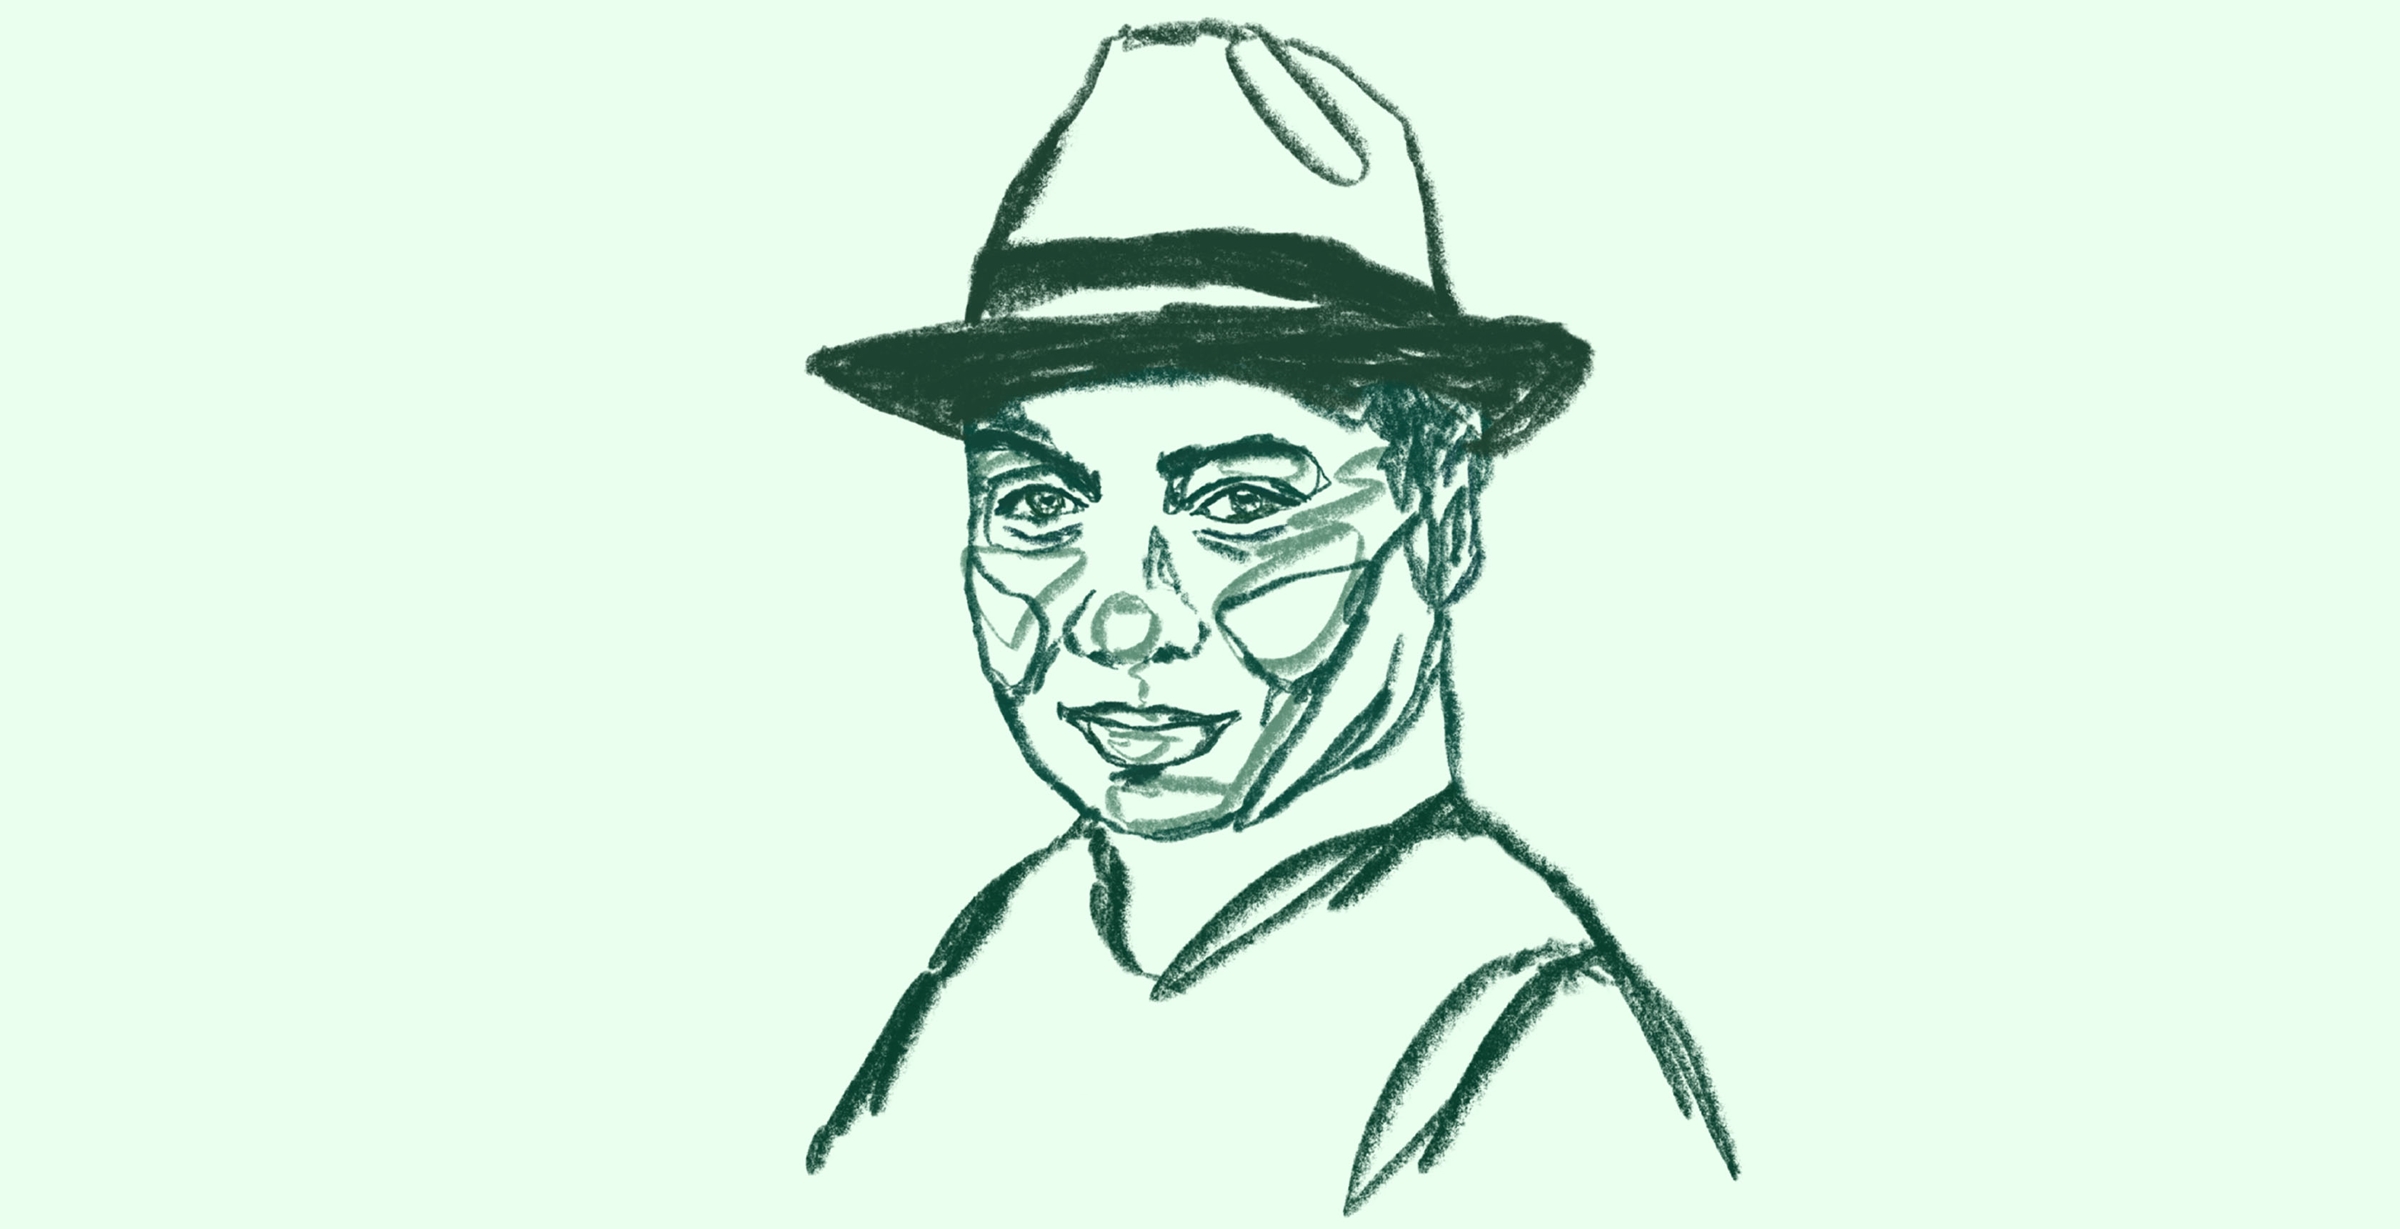 Illustrated portrait of Virgil Ortiz